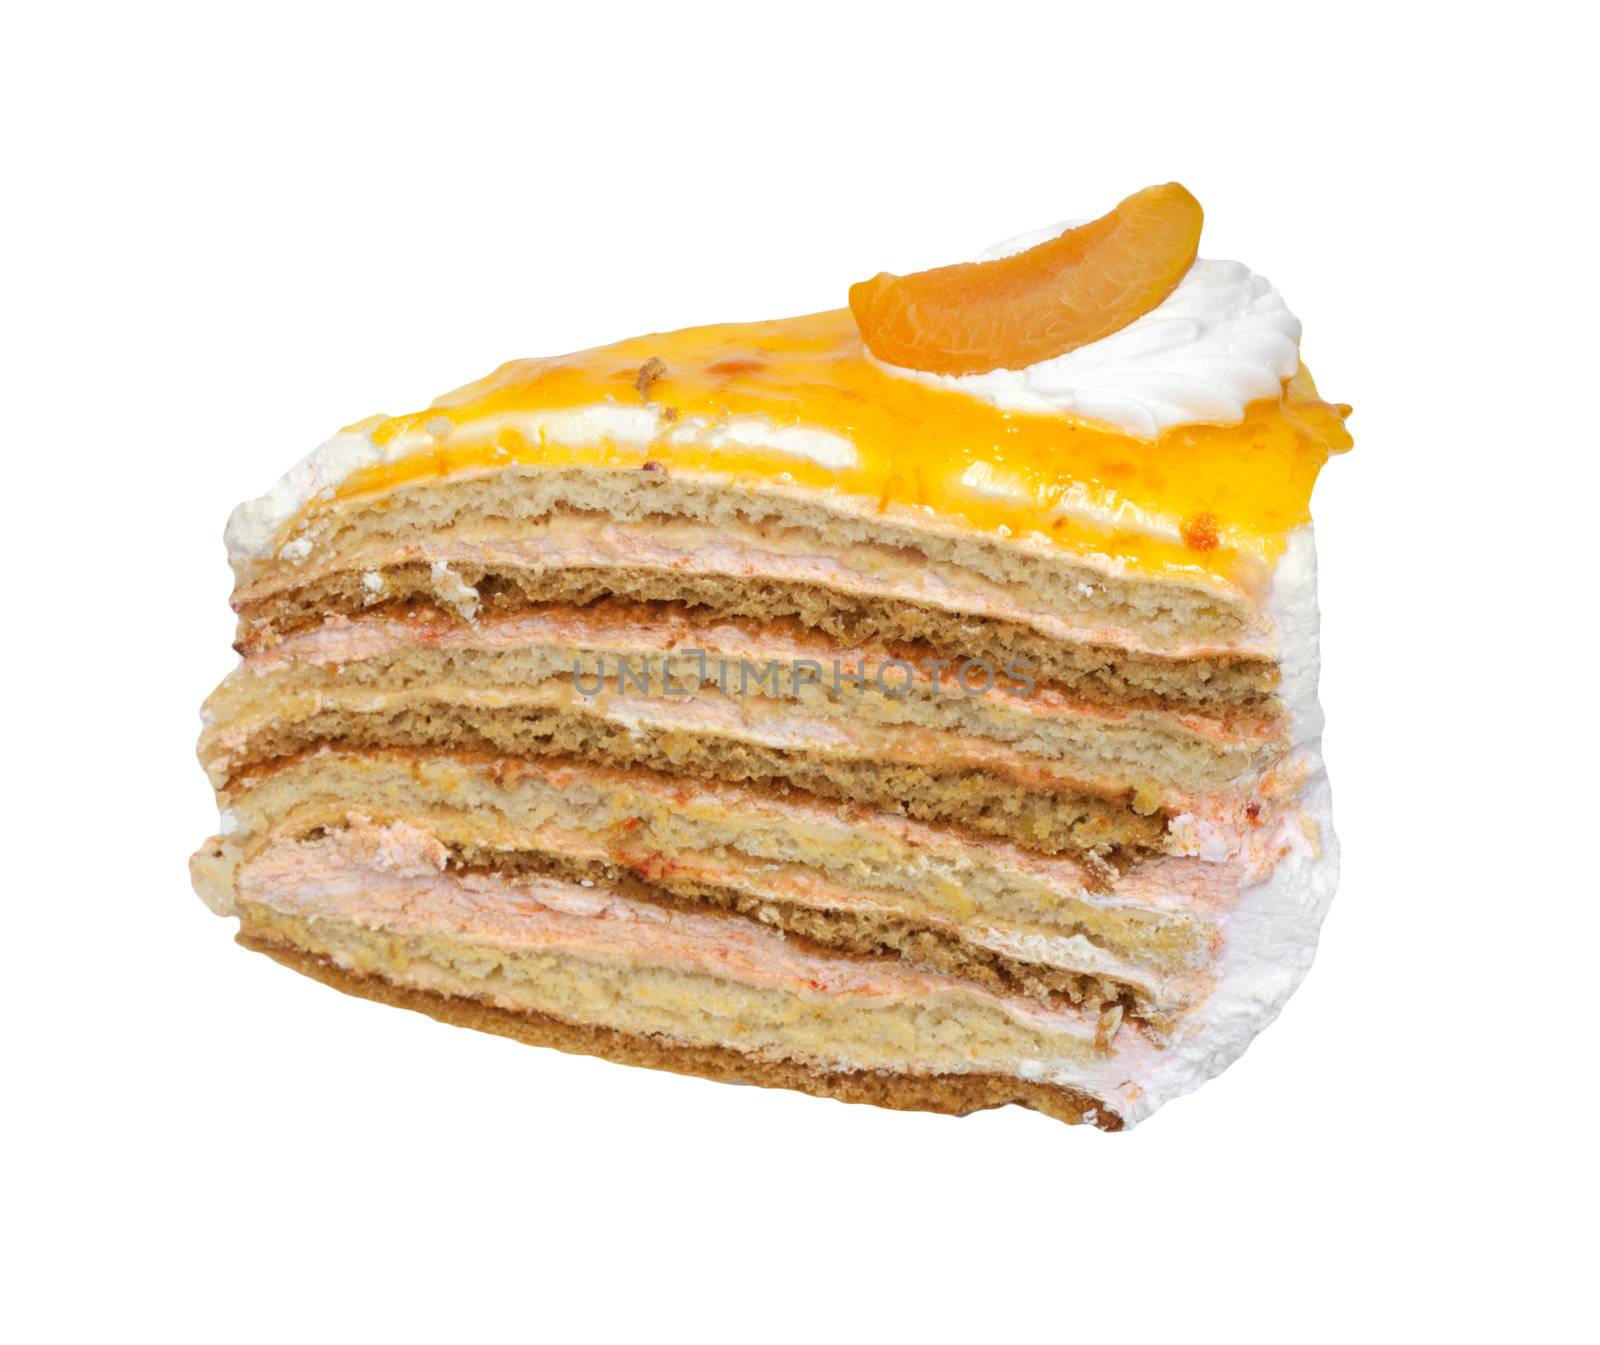 orange cake isolated on white background  by schankz